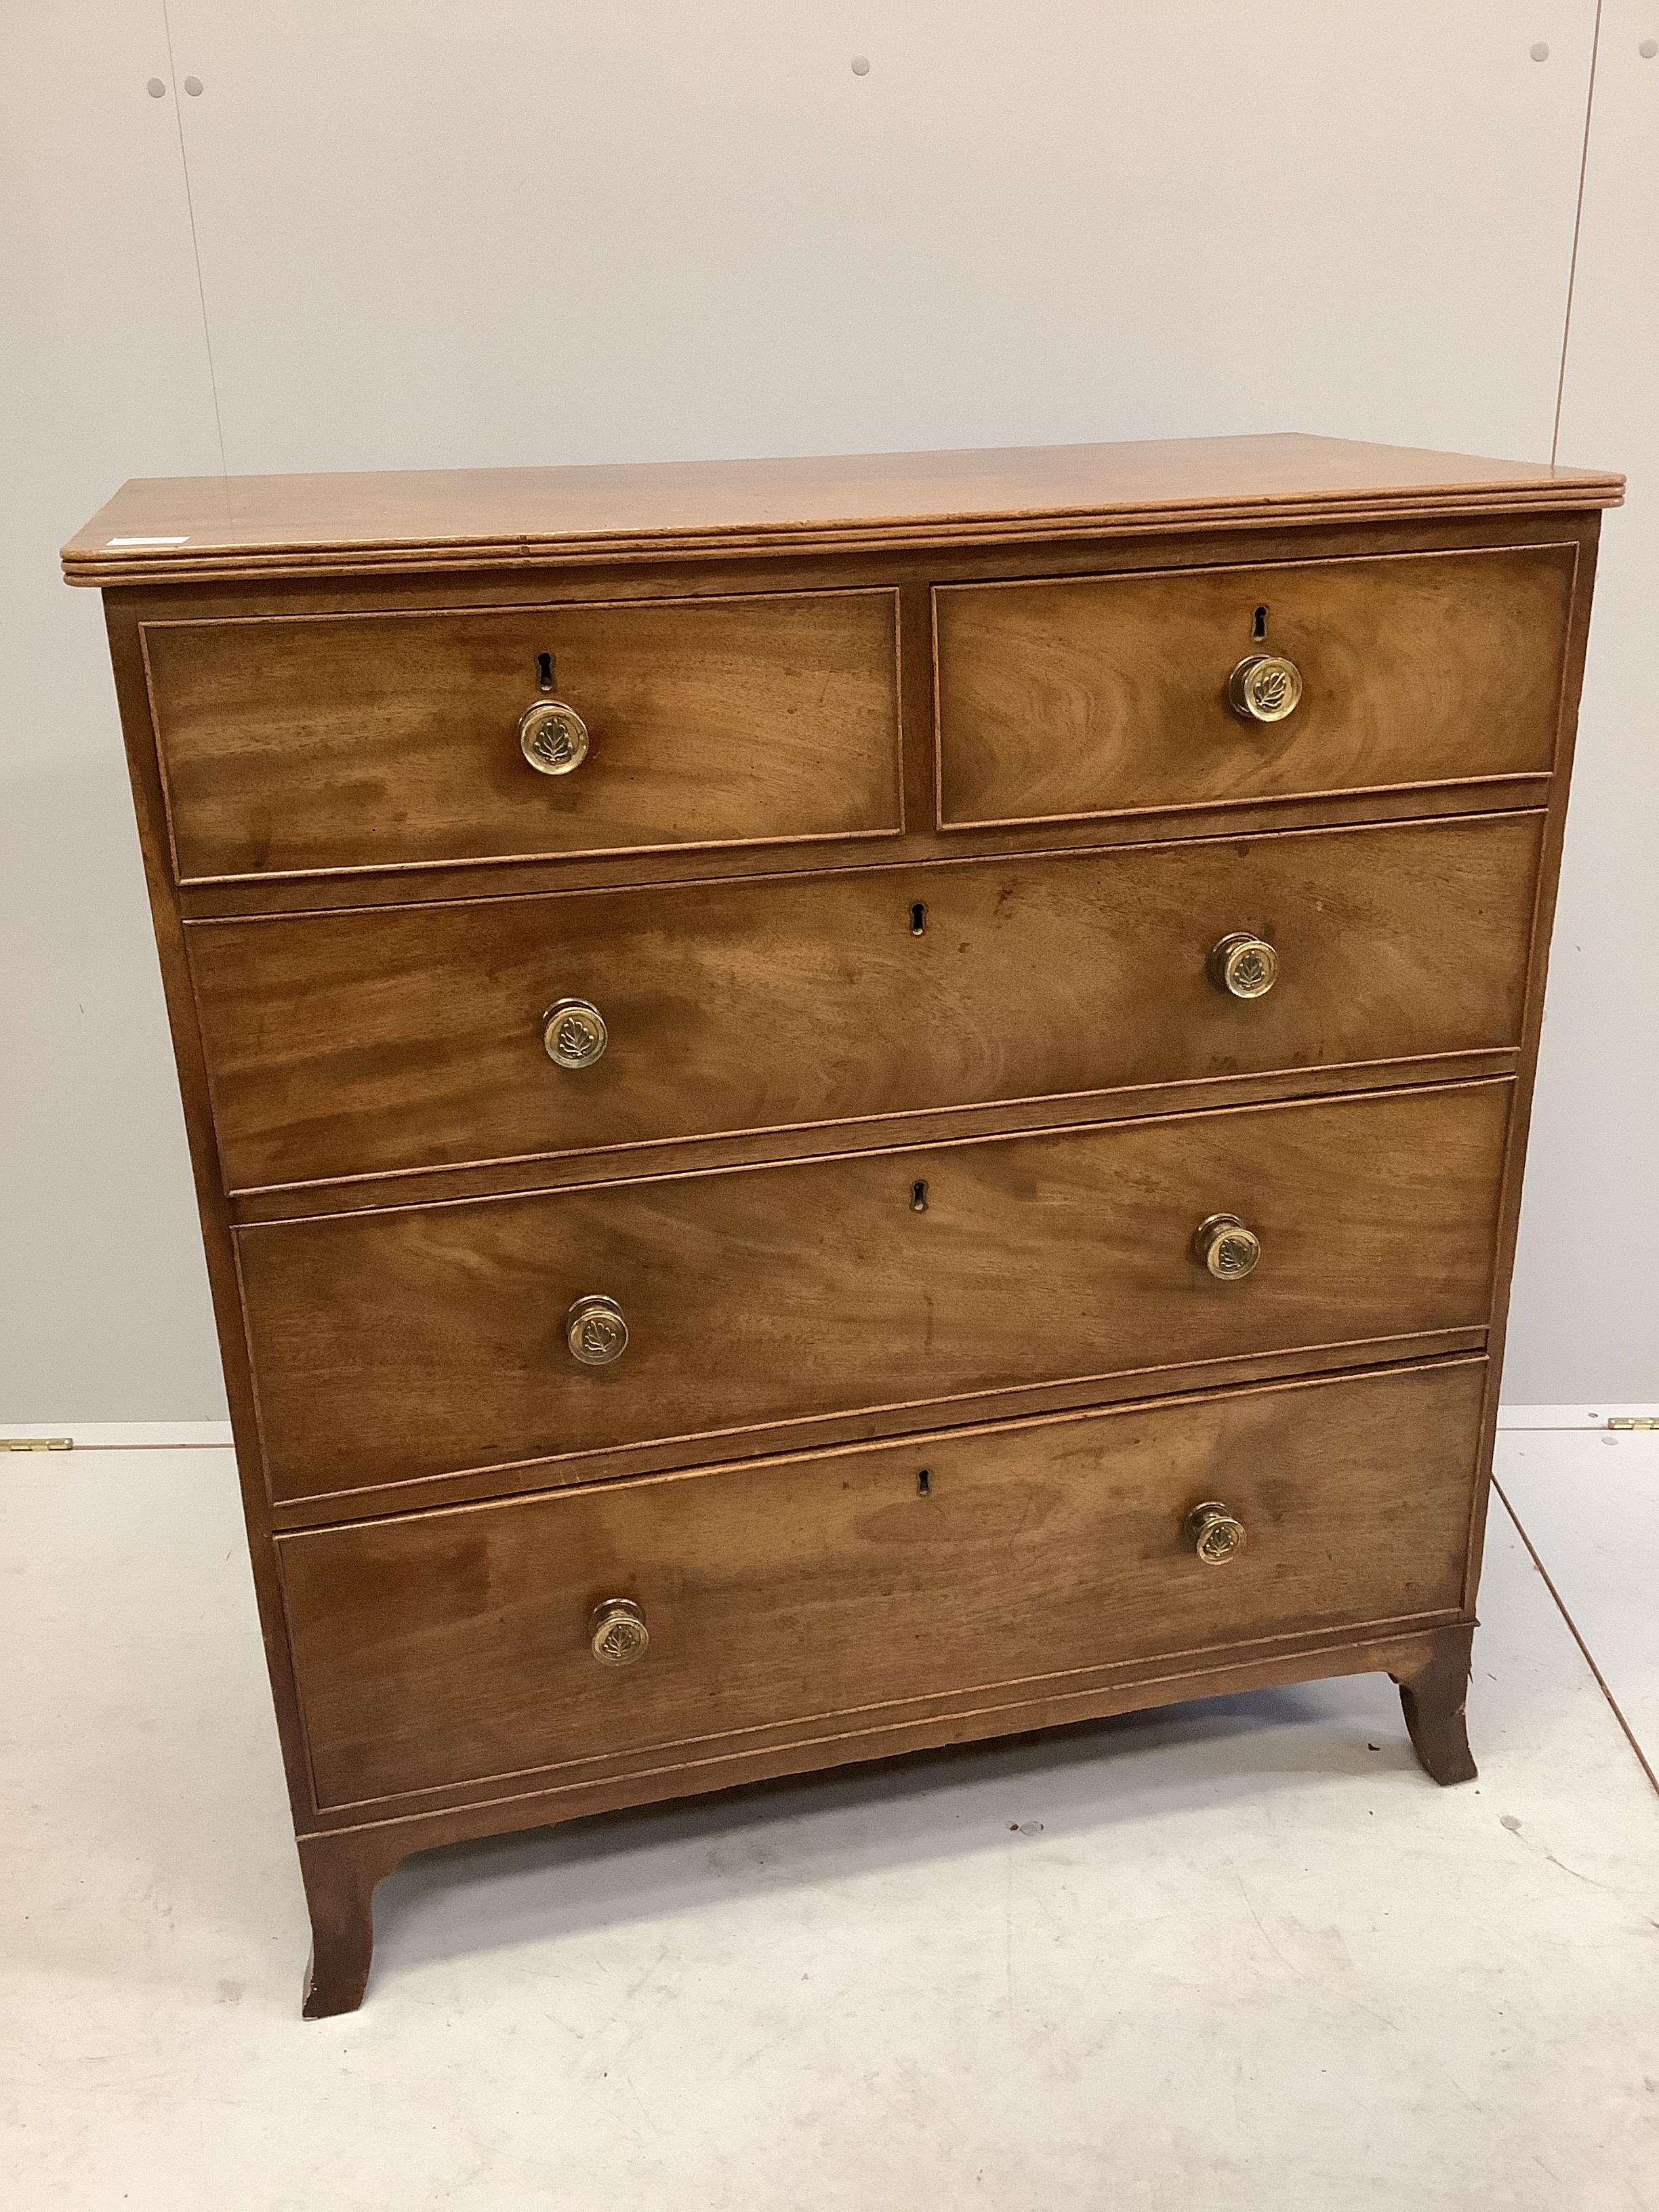 A Regency mahogany five drawer chest, width 95cm, depth 49cm, height 103cm